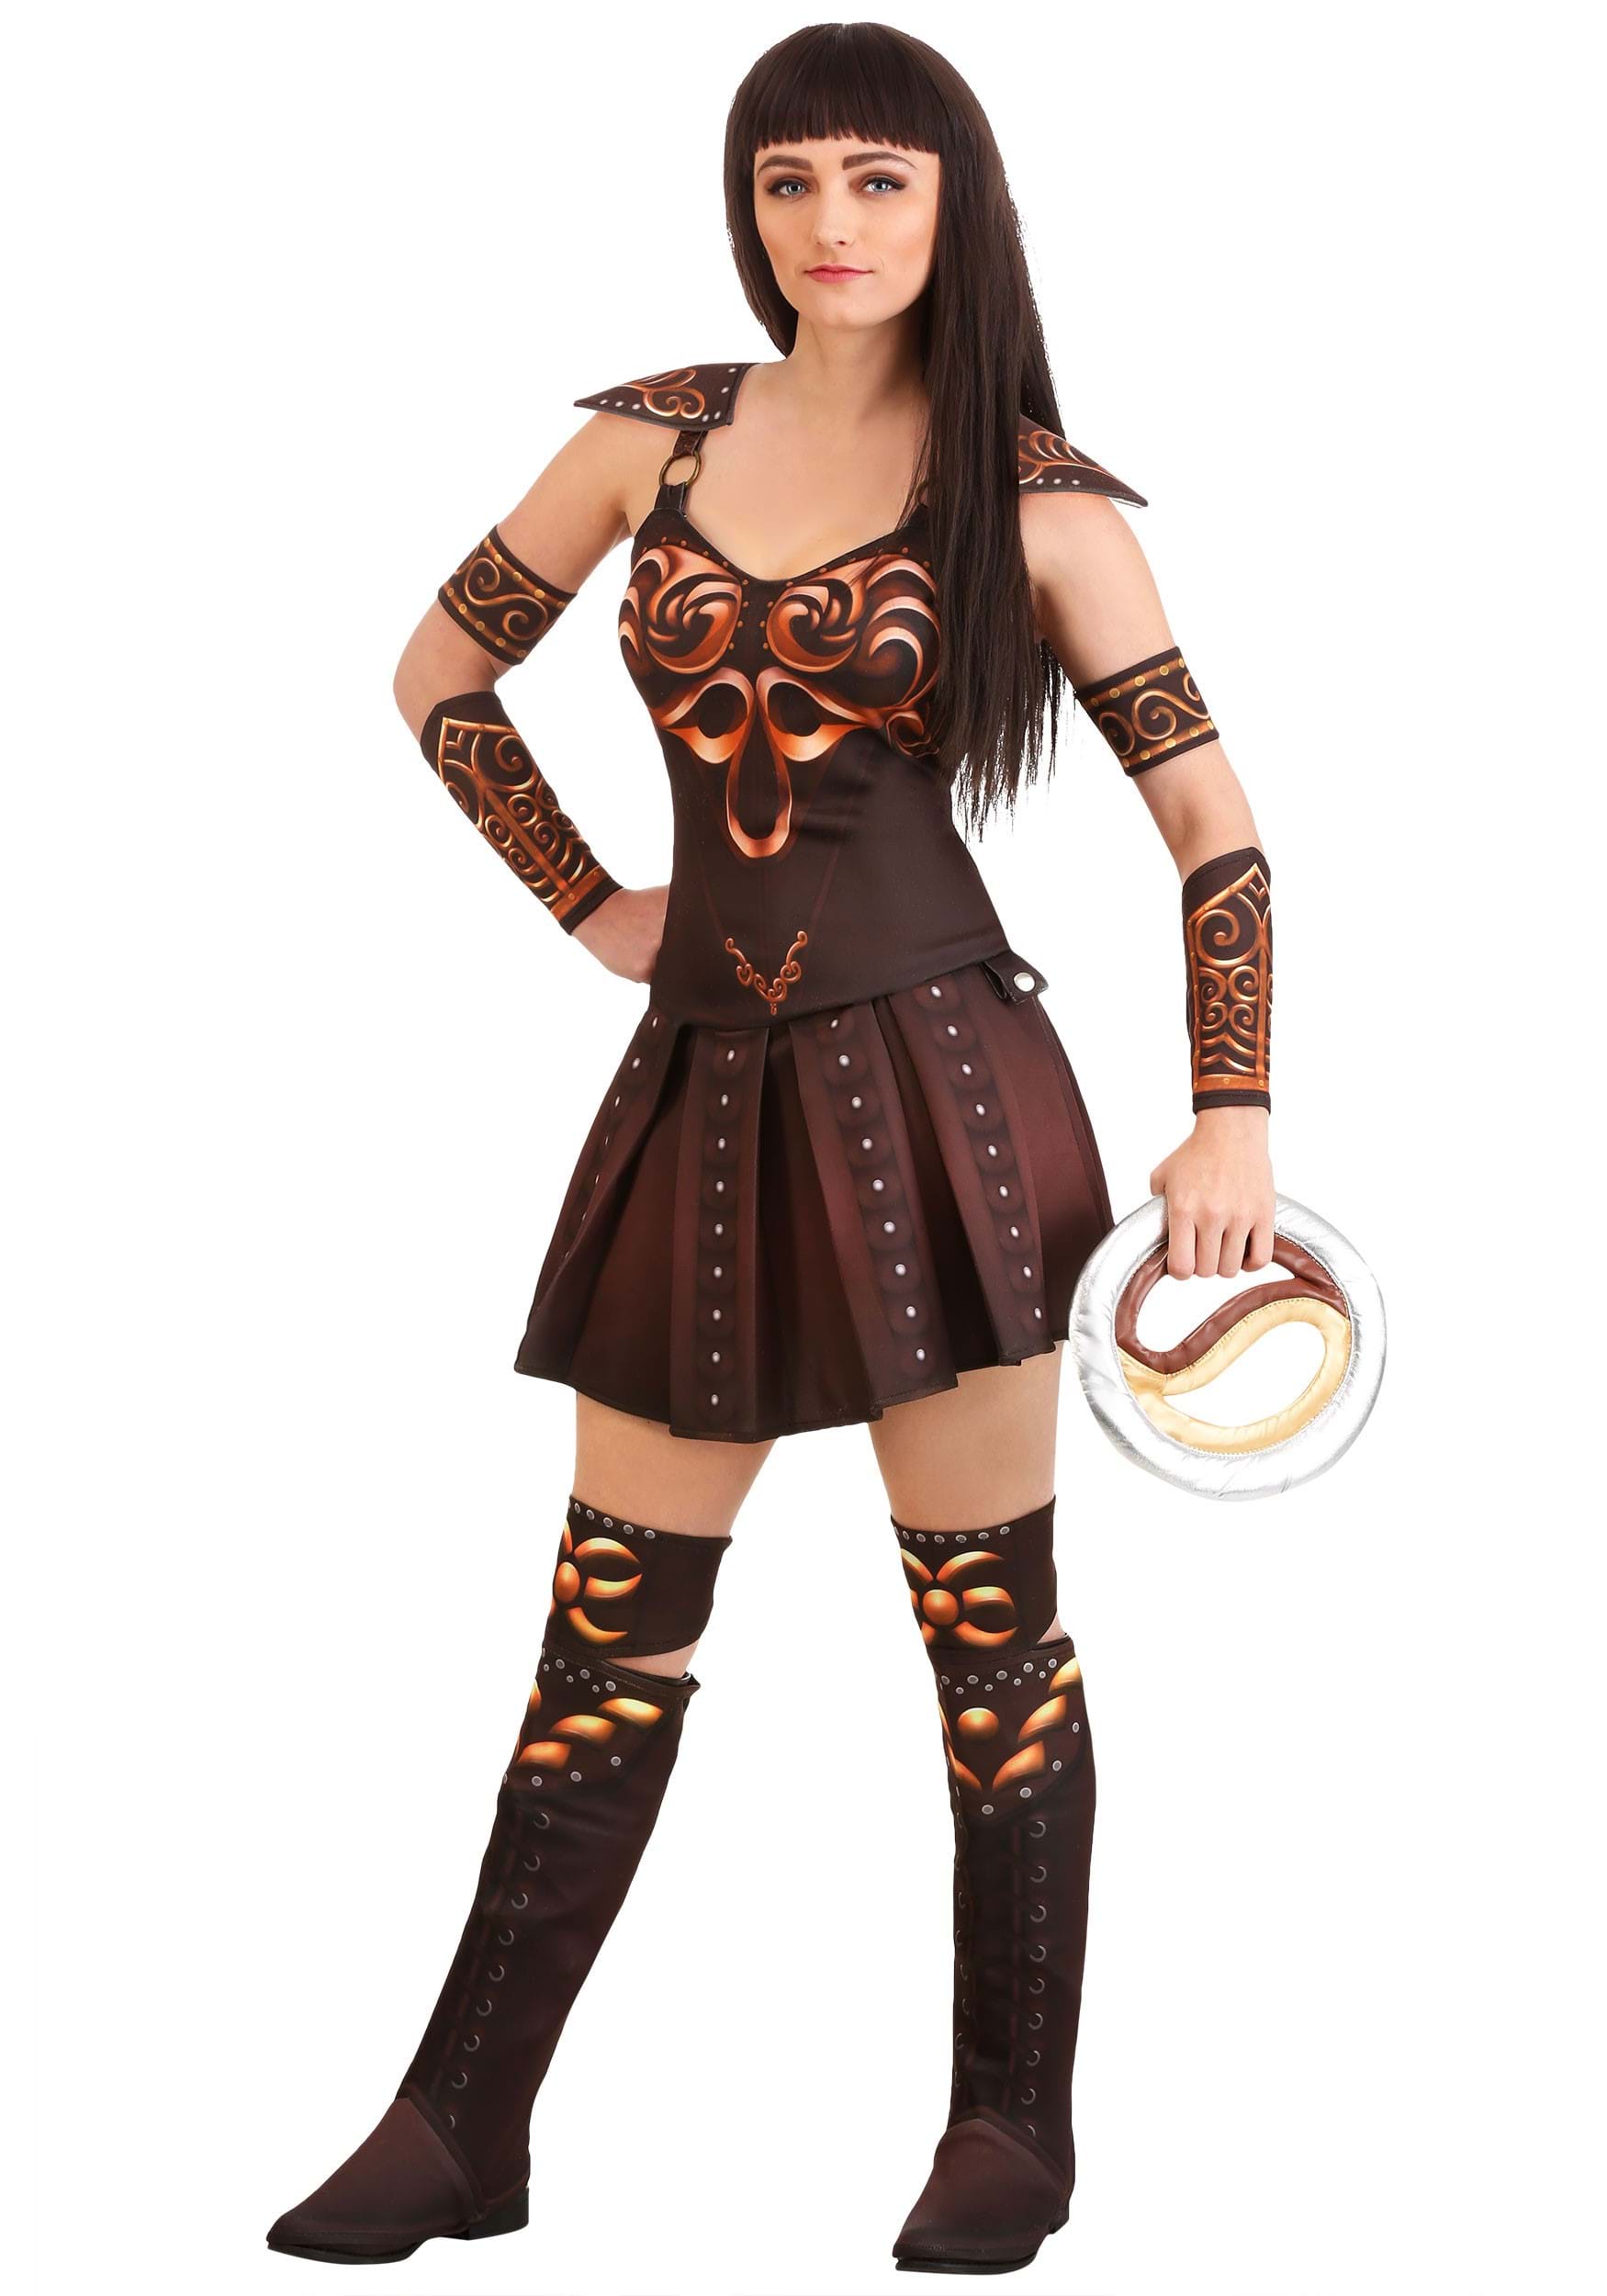 Photos - Fancy Dress XENA FUN Costumes  Warrior Princess Women's Costume Brown/Yellow FUN647 